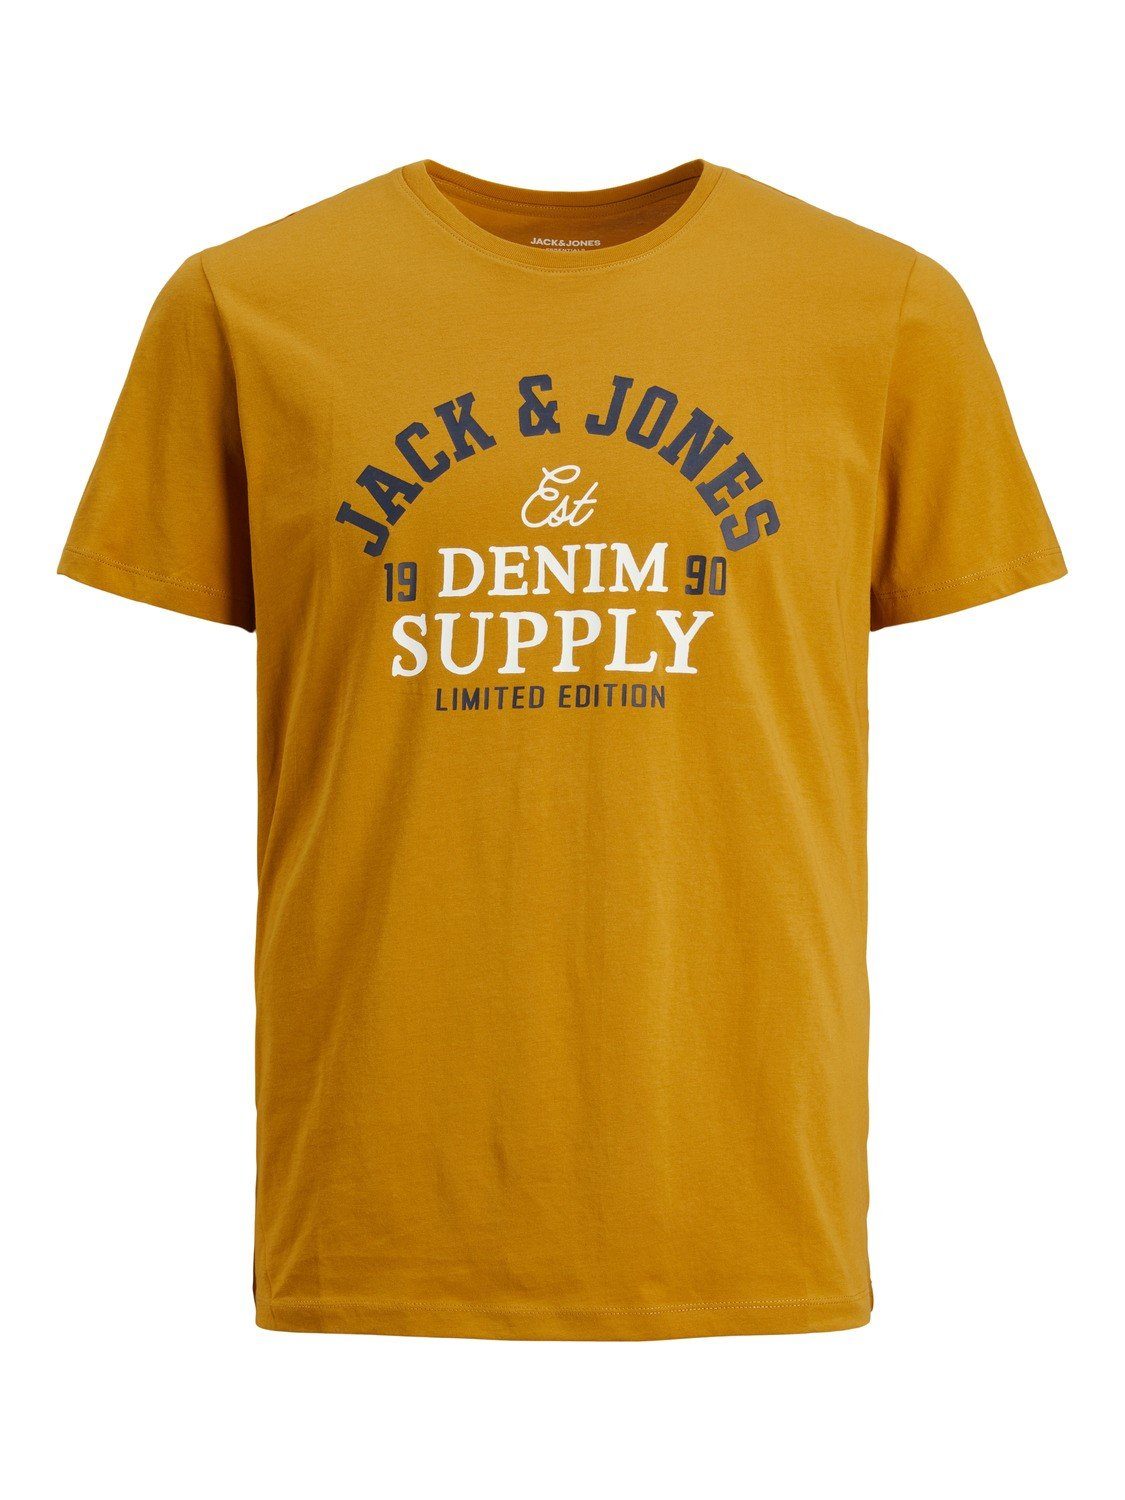 4342 in Stück Pack T-Shirts & Jack Logo JJELOGO Jones T-Shirt Schwarz-Gelb Rundhals (2-tlg) 2-er Shirt